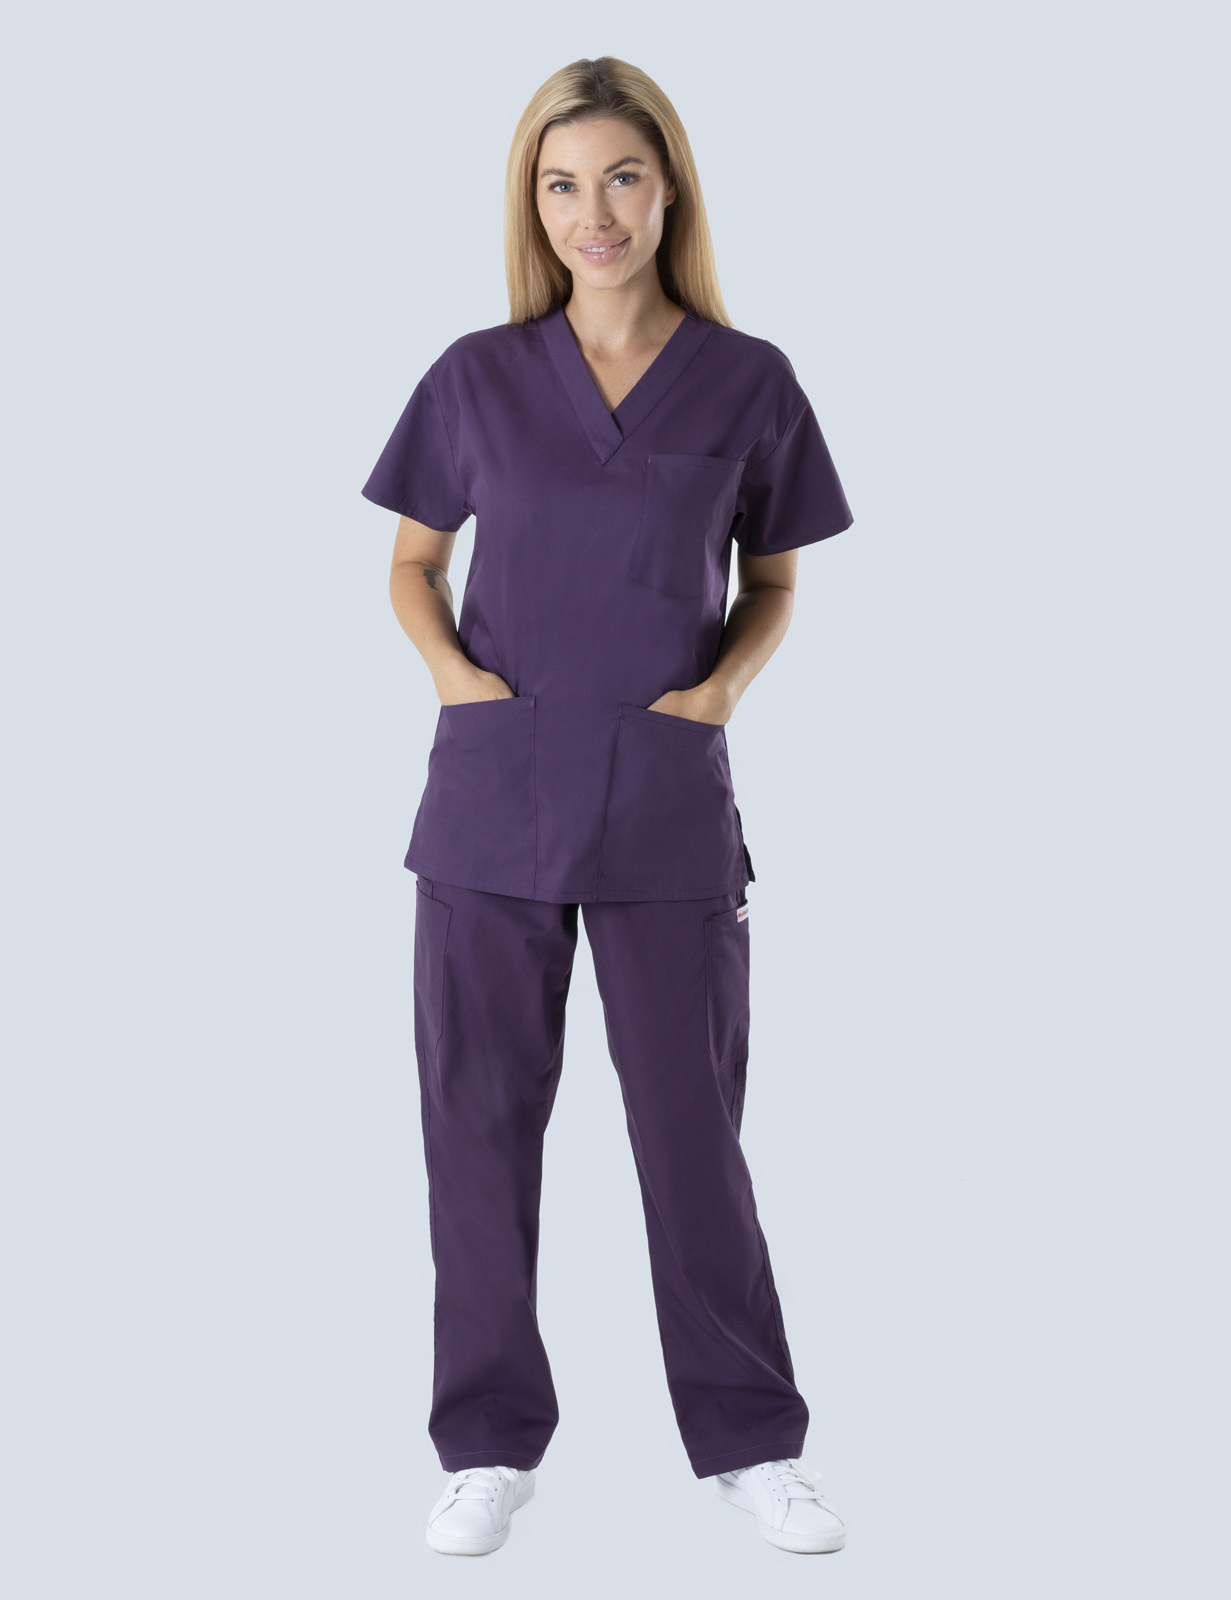 Biloela Hospital Healthcare Department Uniform Set Bundle (4 Pocket Top and Cargo pants in Aubergine incl Logos)